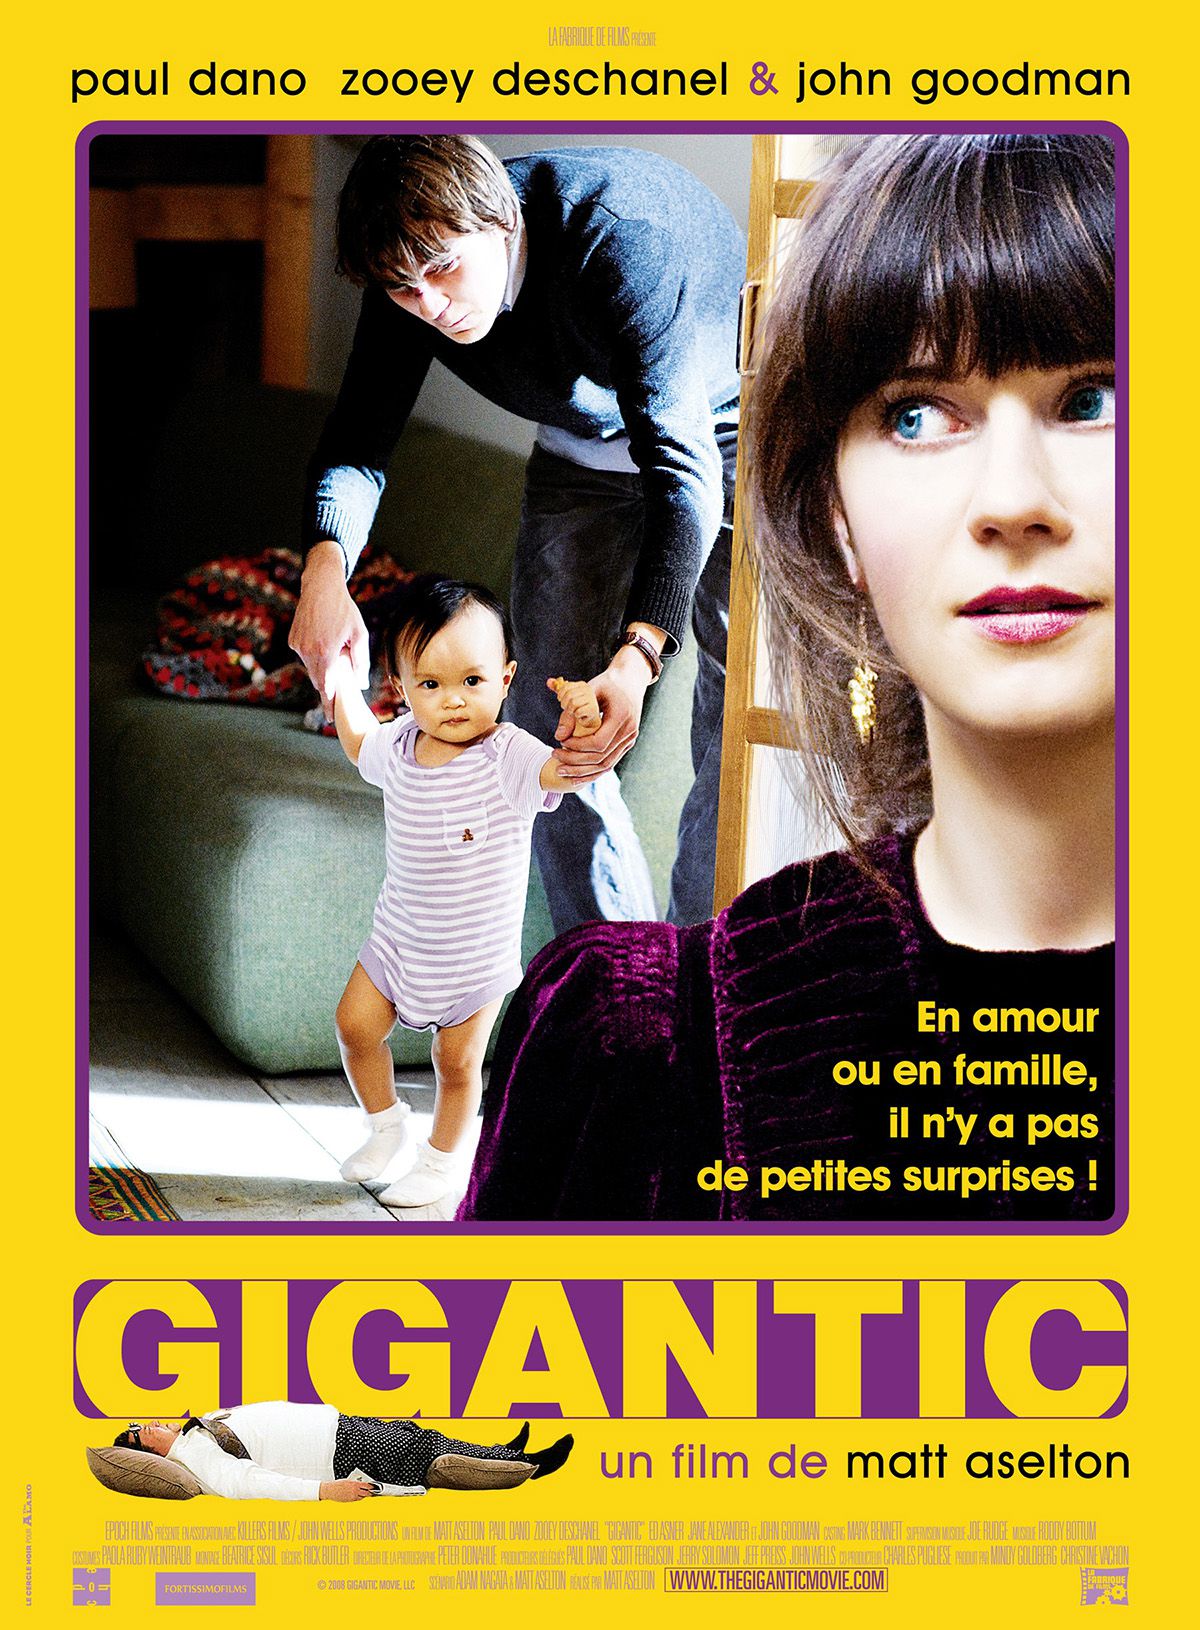 Gigantic - Film (2009) streaming VF gratuit complet